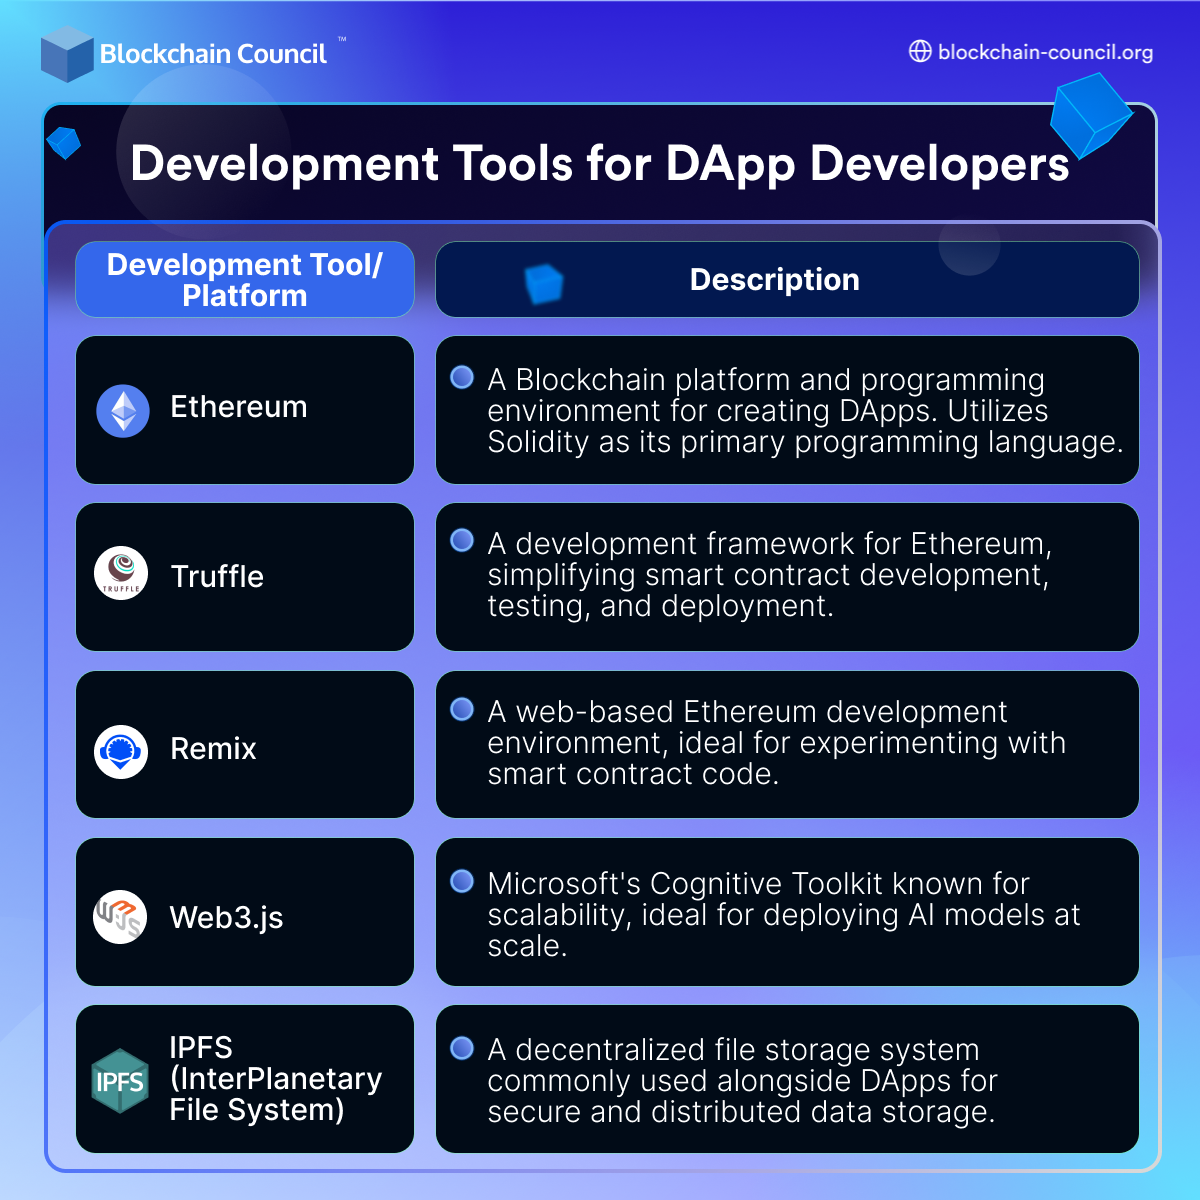 Development tools and platforms